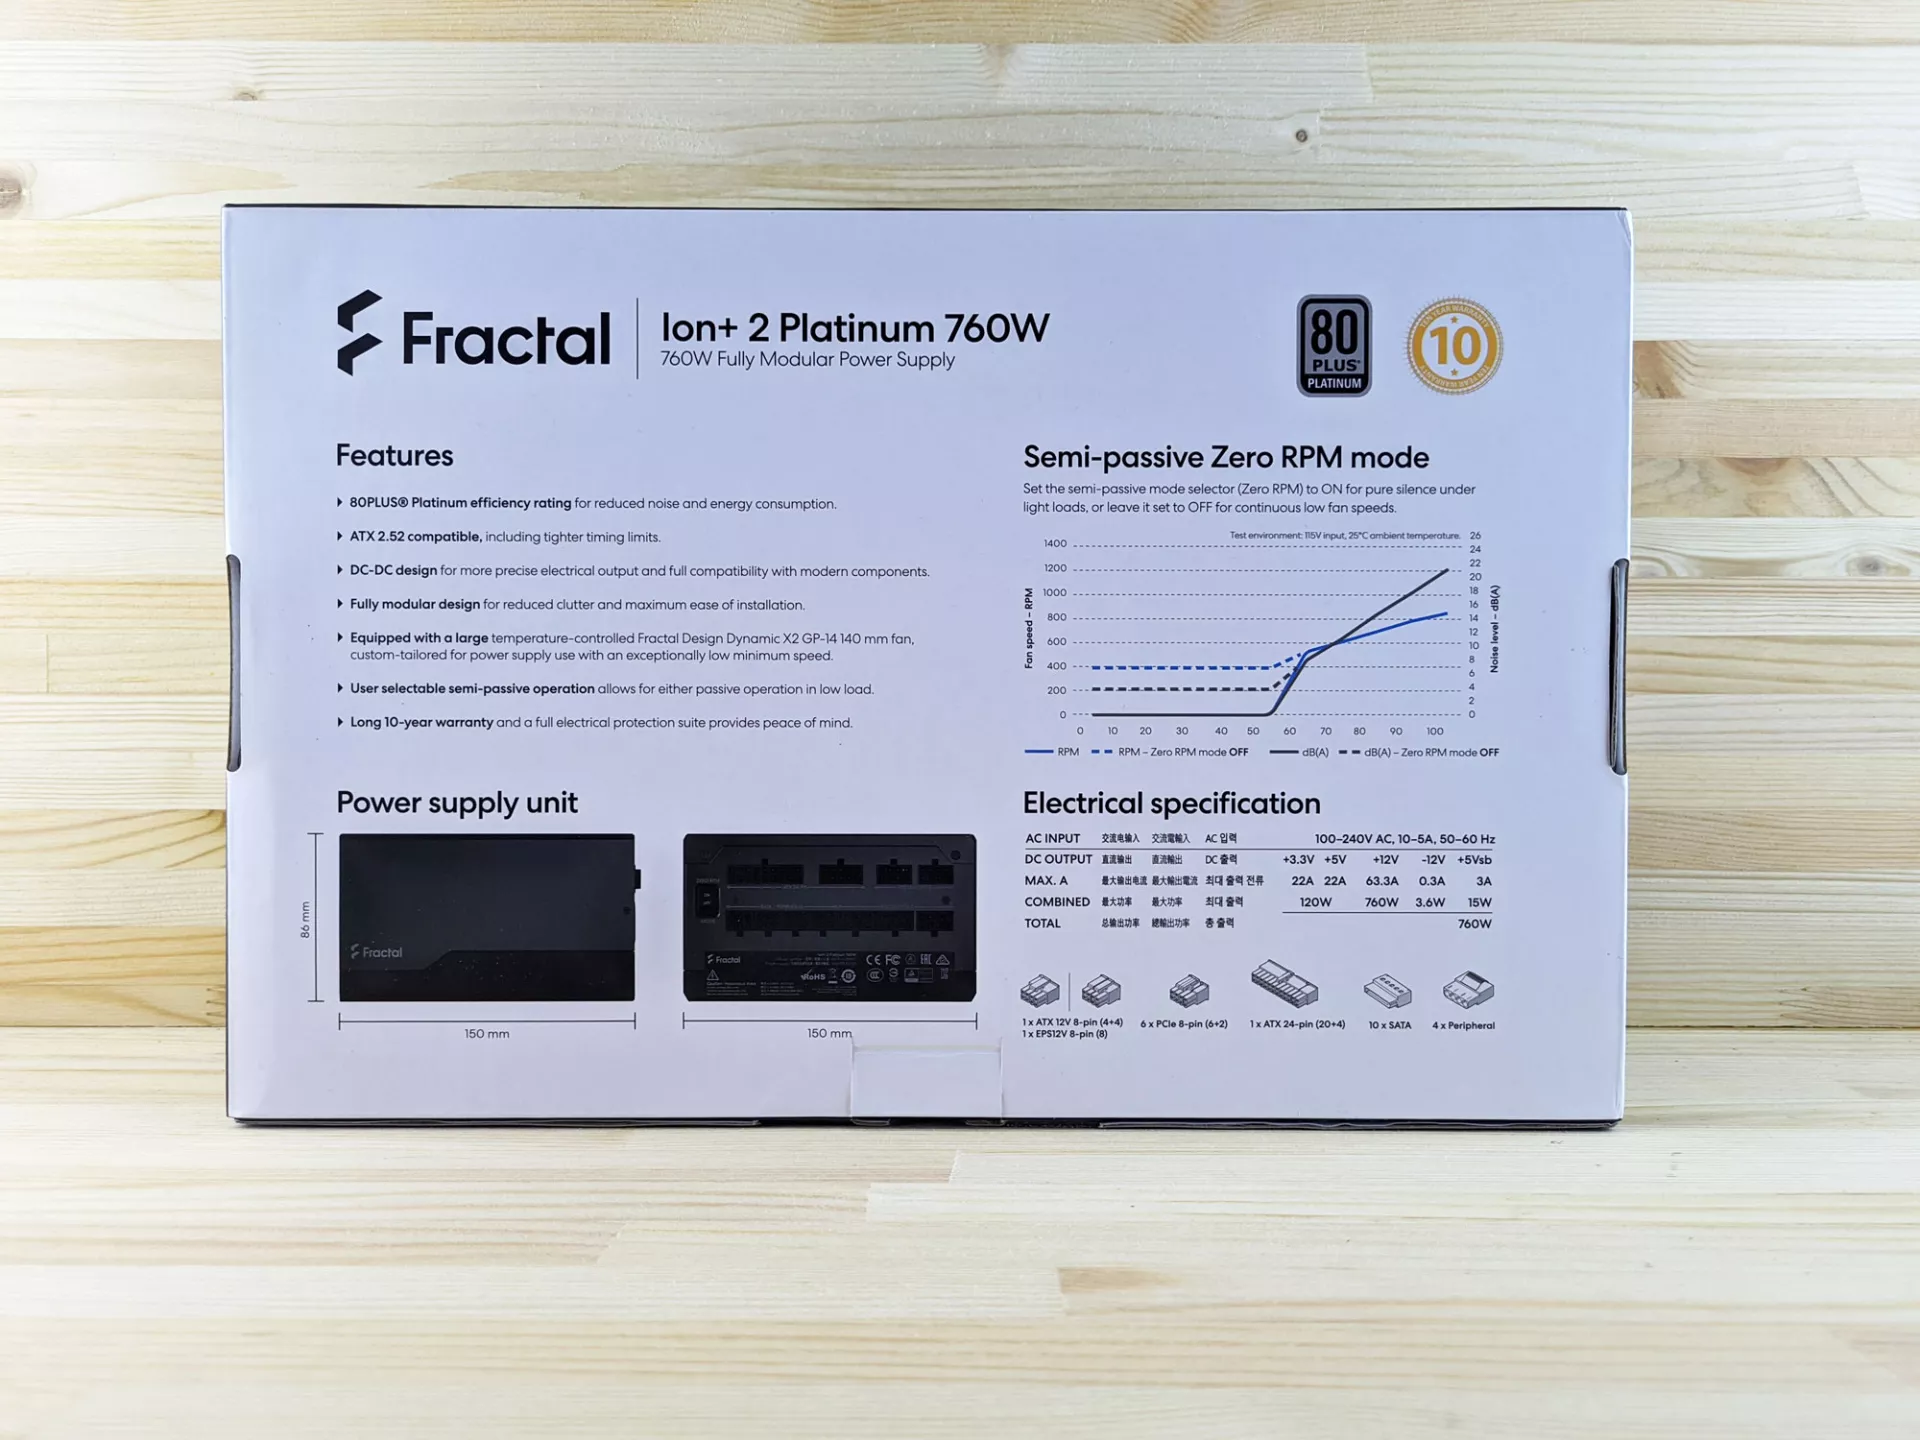 Тест-драйв блока питания Fractal Ion+ 2 Platinum 760W